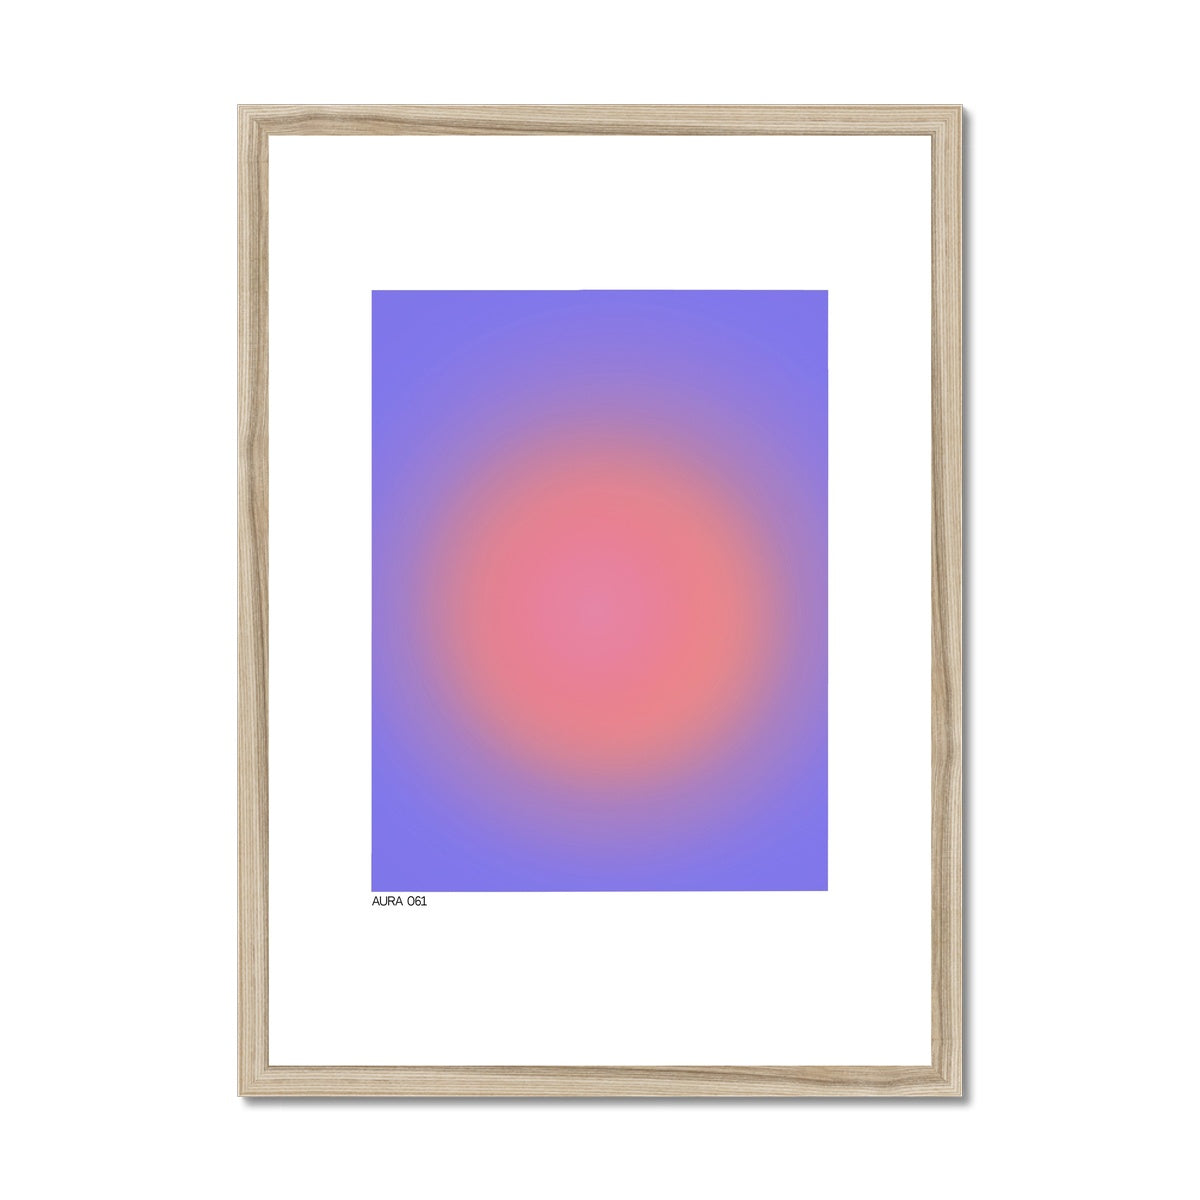 aura 061 Framed & Mounted Print